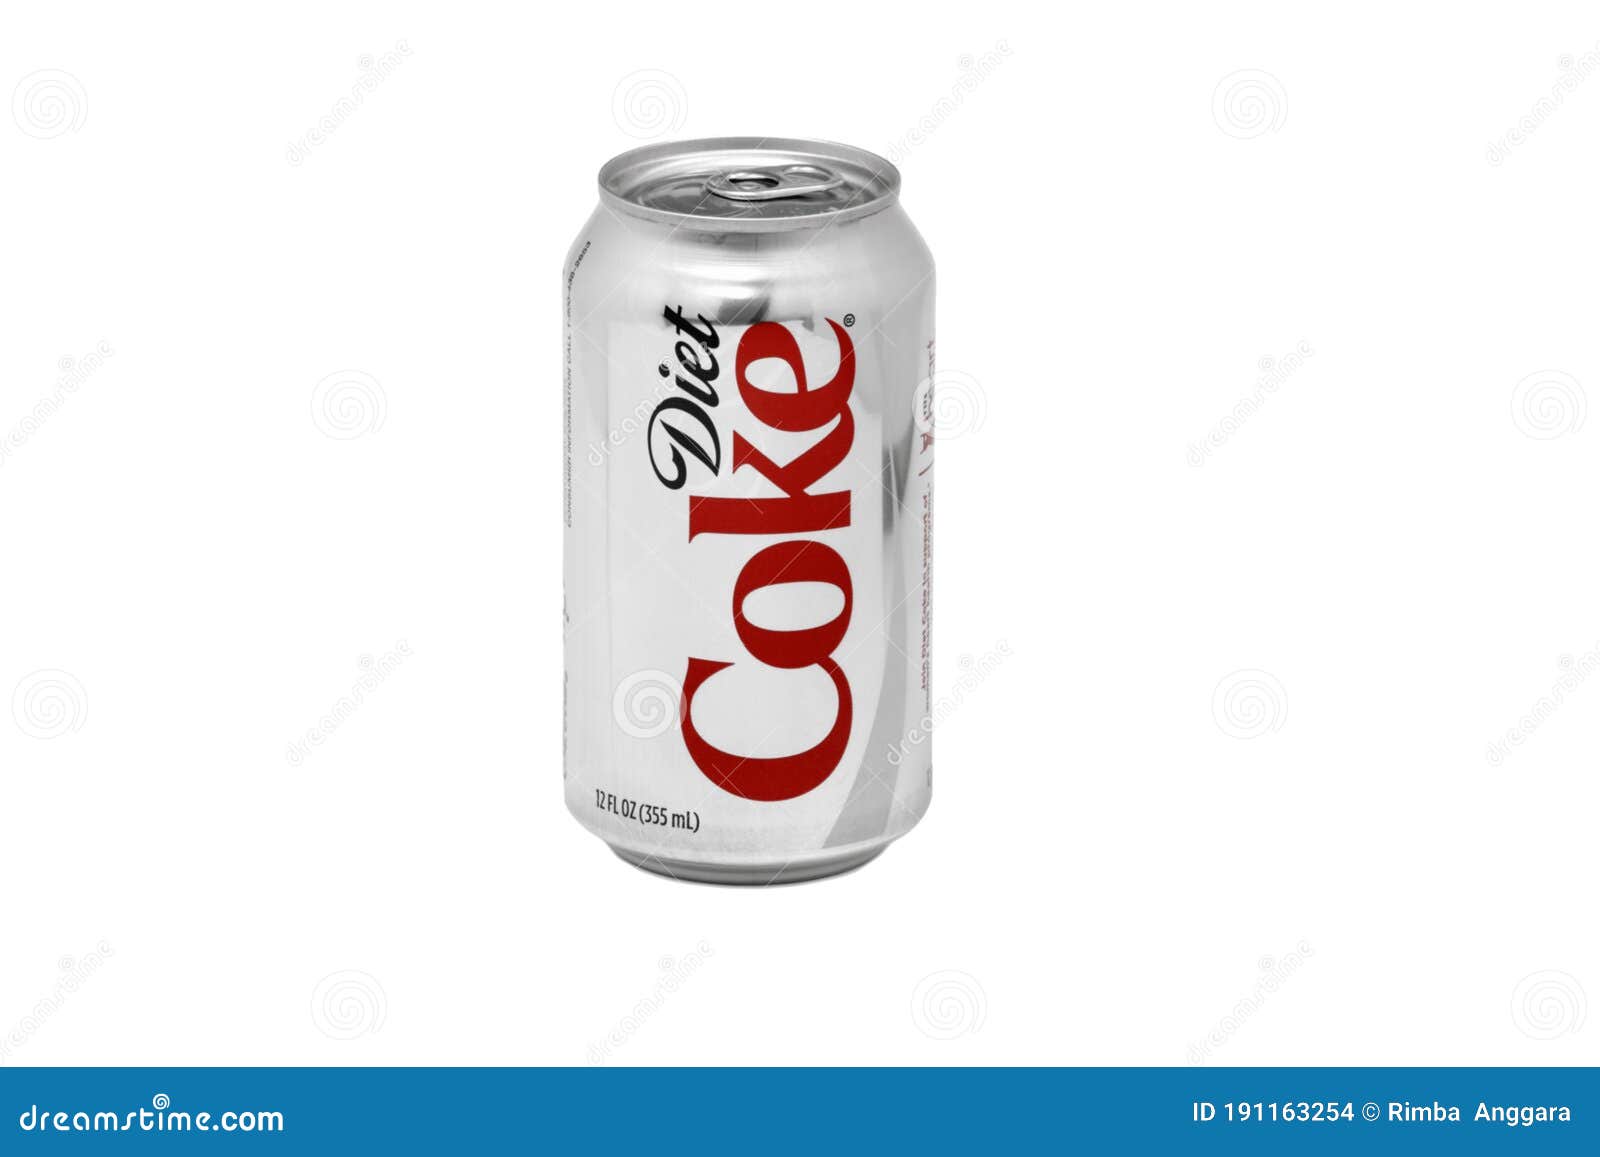 https://thumbs.dreamstime.com/z/coca-cola-white-background-bottle-coca-cola-diet-coke-zero-sugar-white-background-coca-cola-carbonated-soft-drink-191163254.jpg